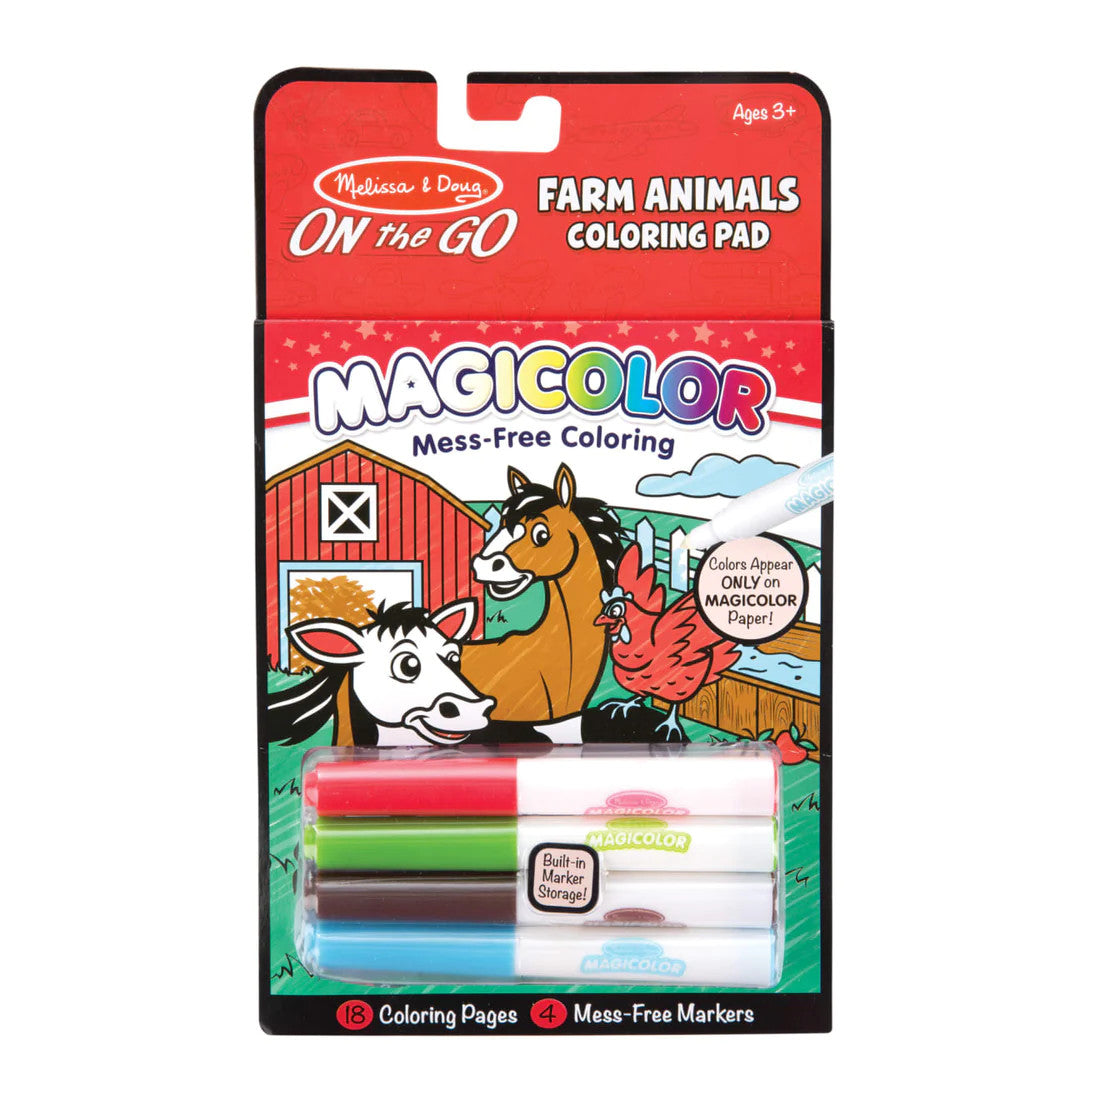 Farm Animals Magicolor Coloring Pad